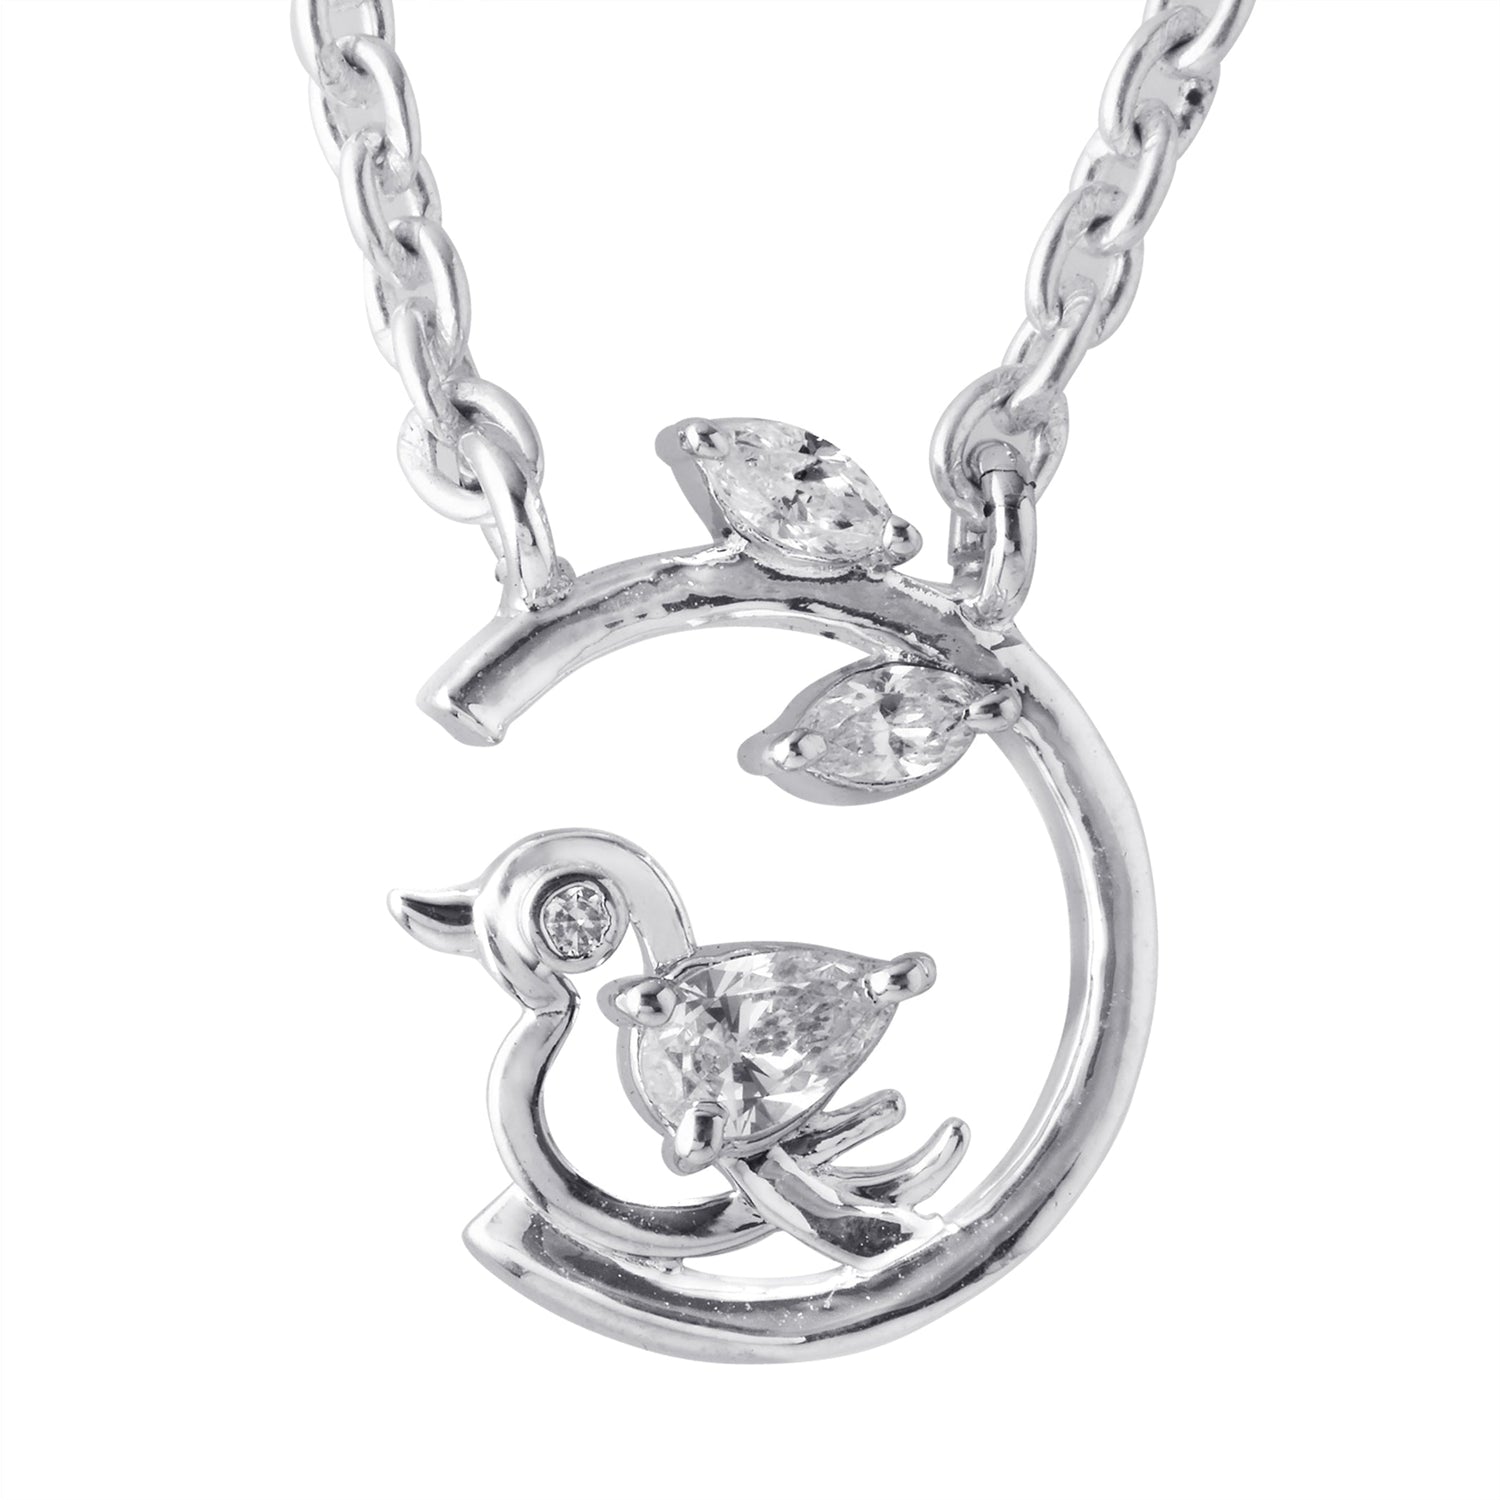 Swarovski crystals jewellery hallmark certified .925 silver pendants earrings caratcafe 